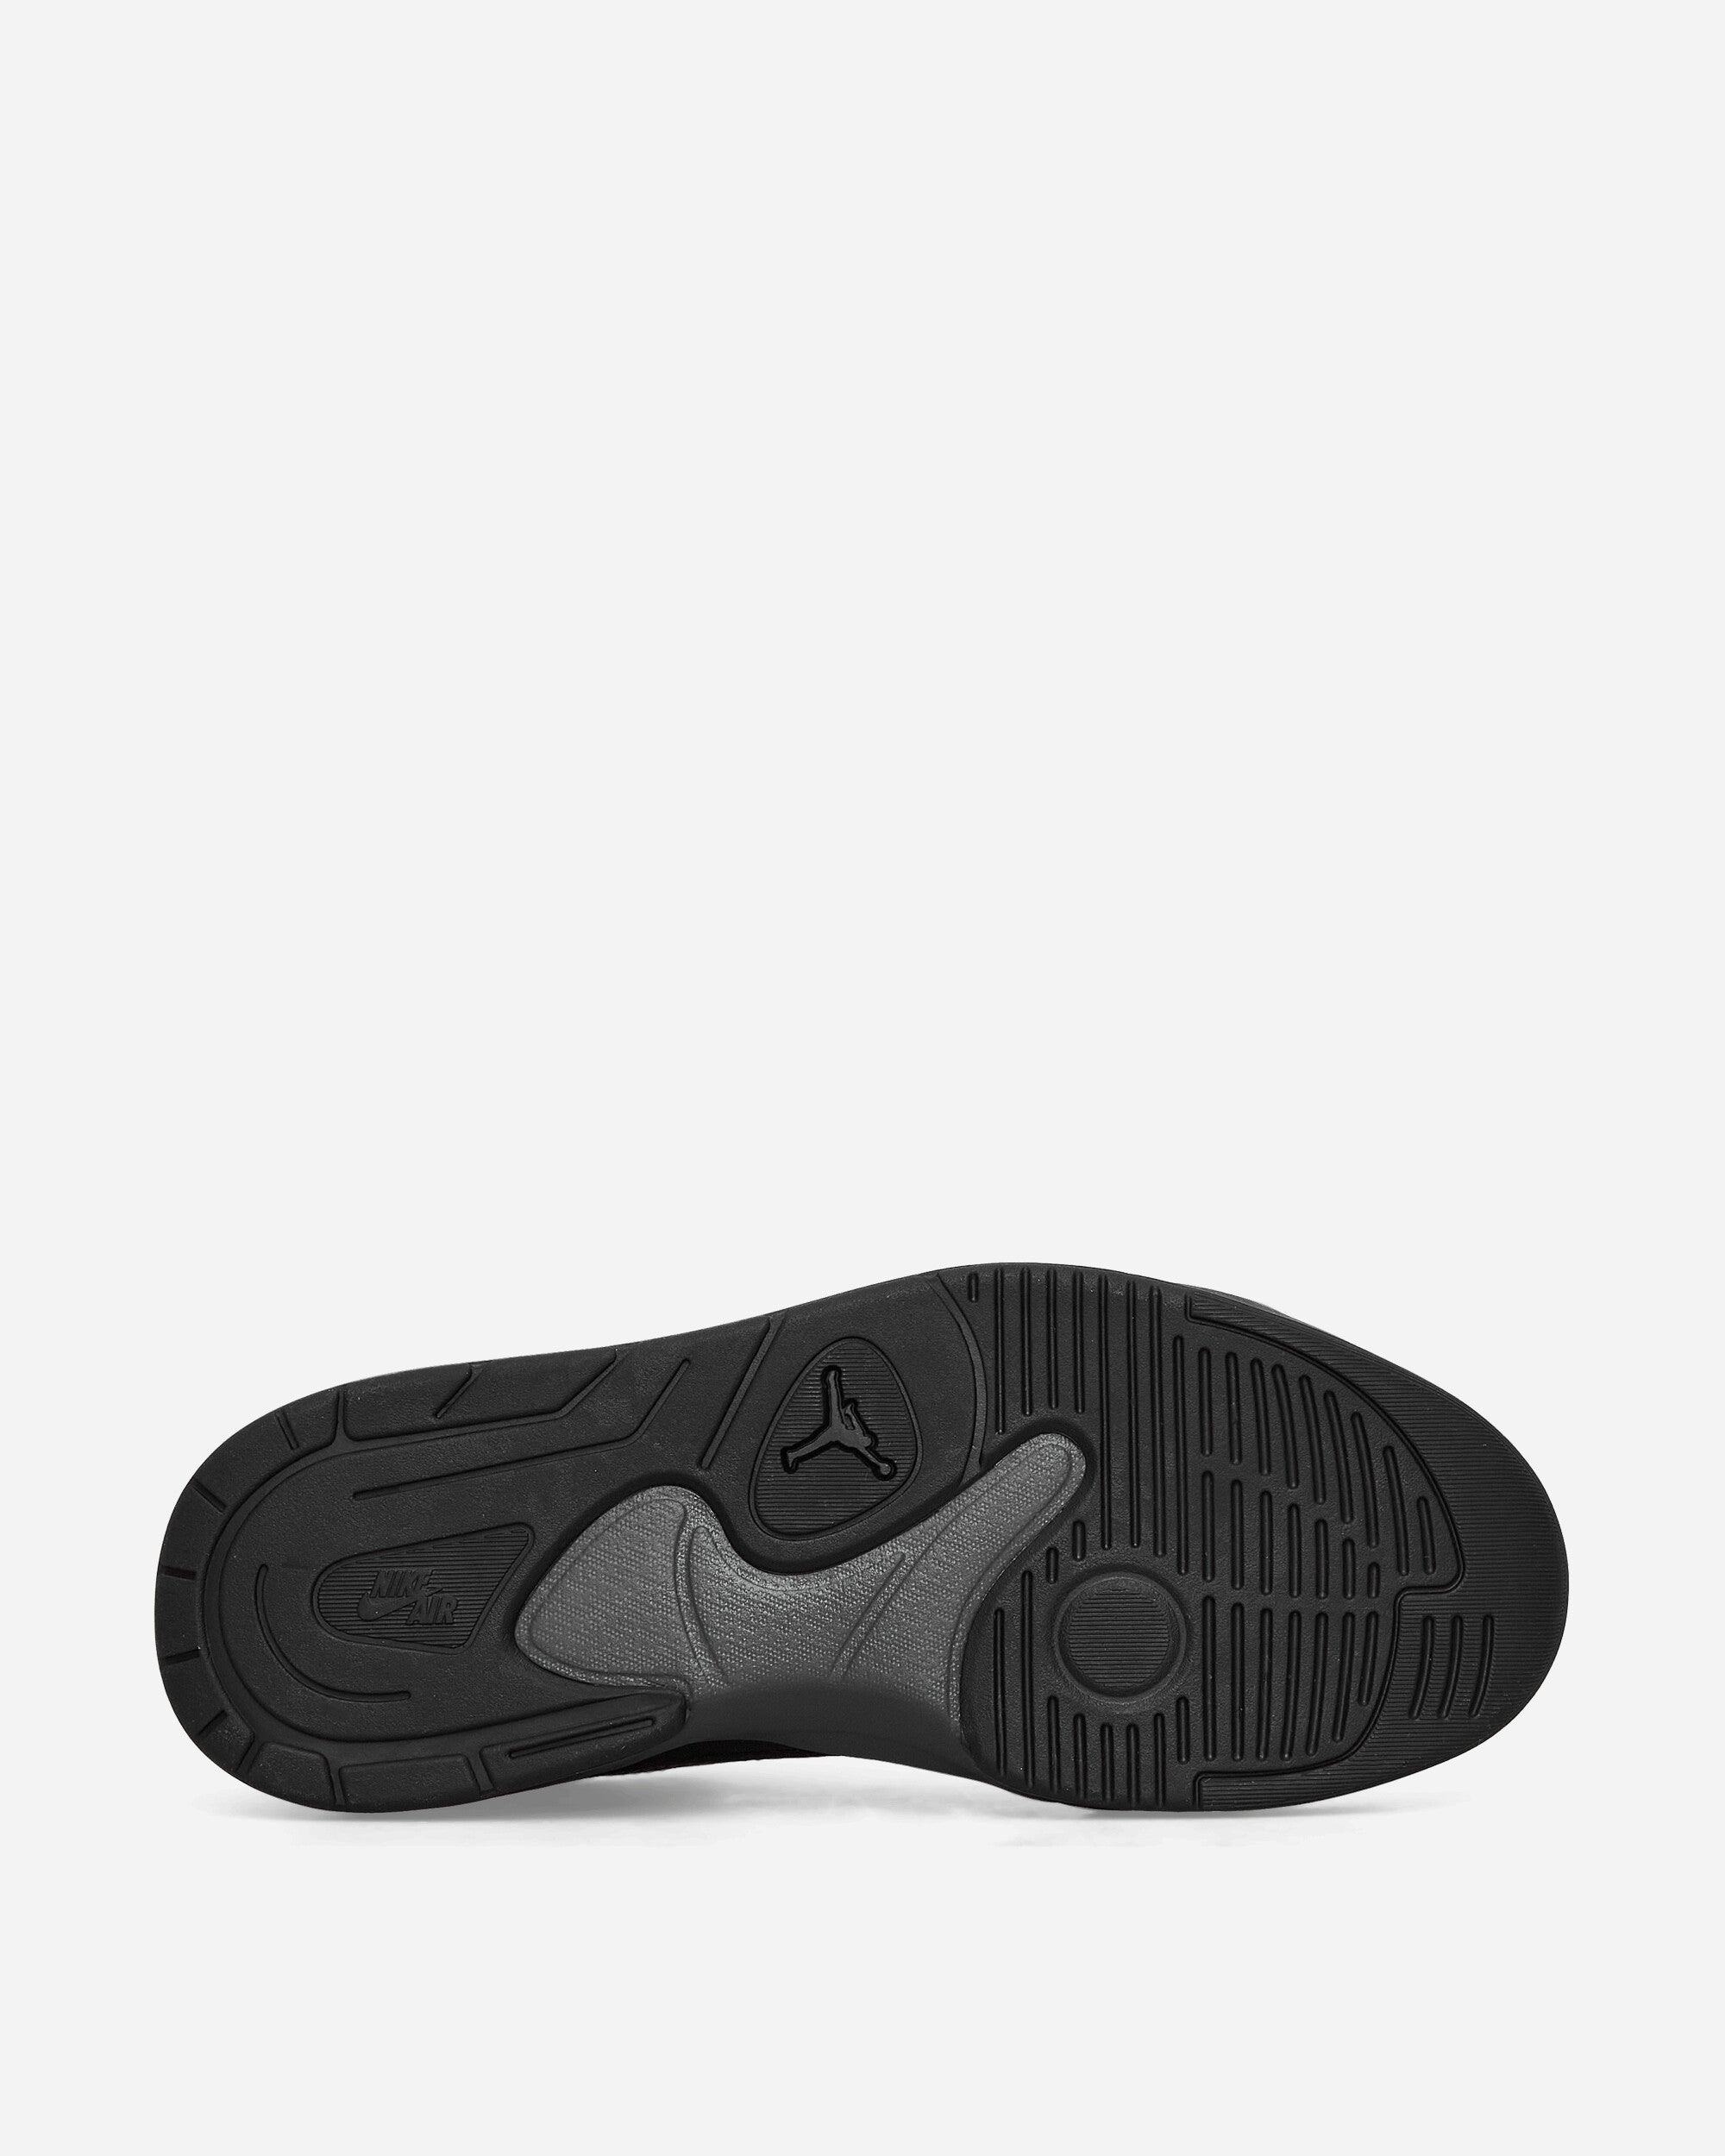 Nike Jordan Jordan Stadium 90 (Gs) Black/White/Black Sneakers Low DX4399-001